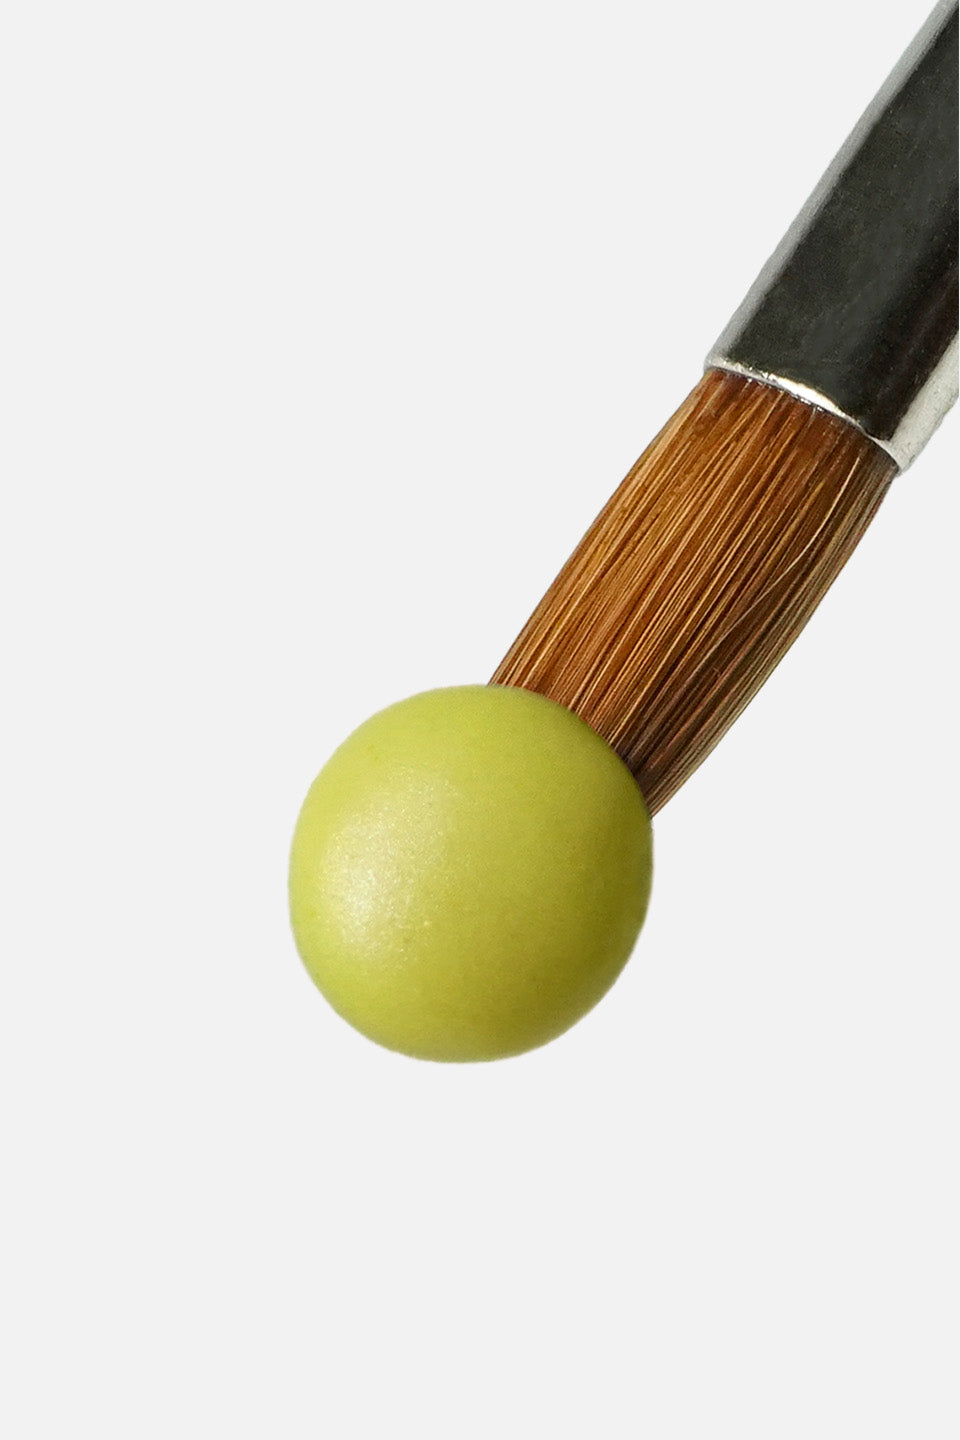 Polvere acrilica verde pistacchio 5 g